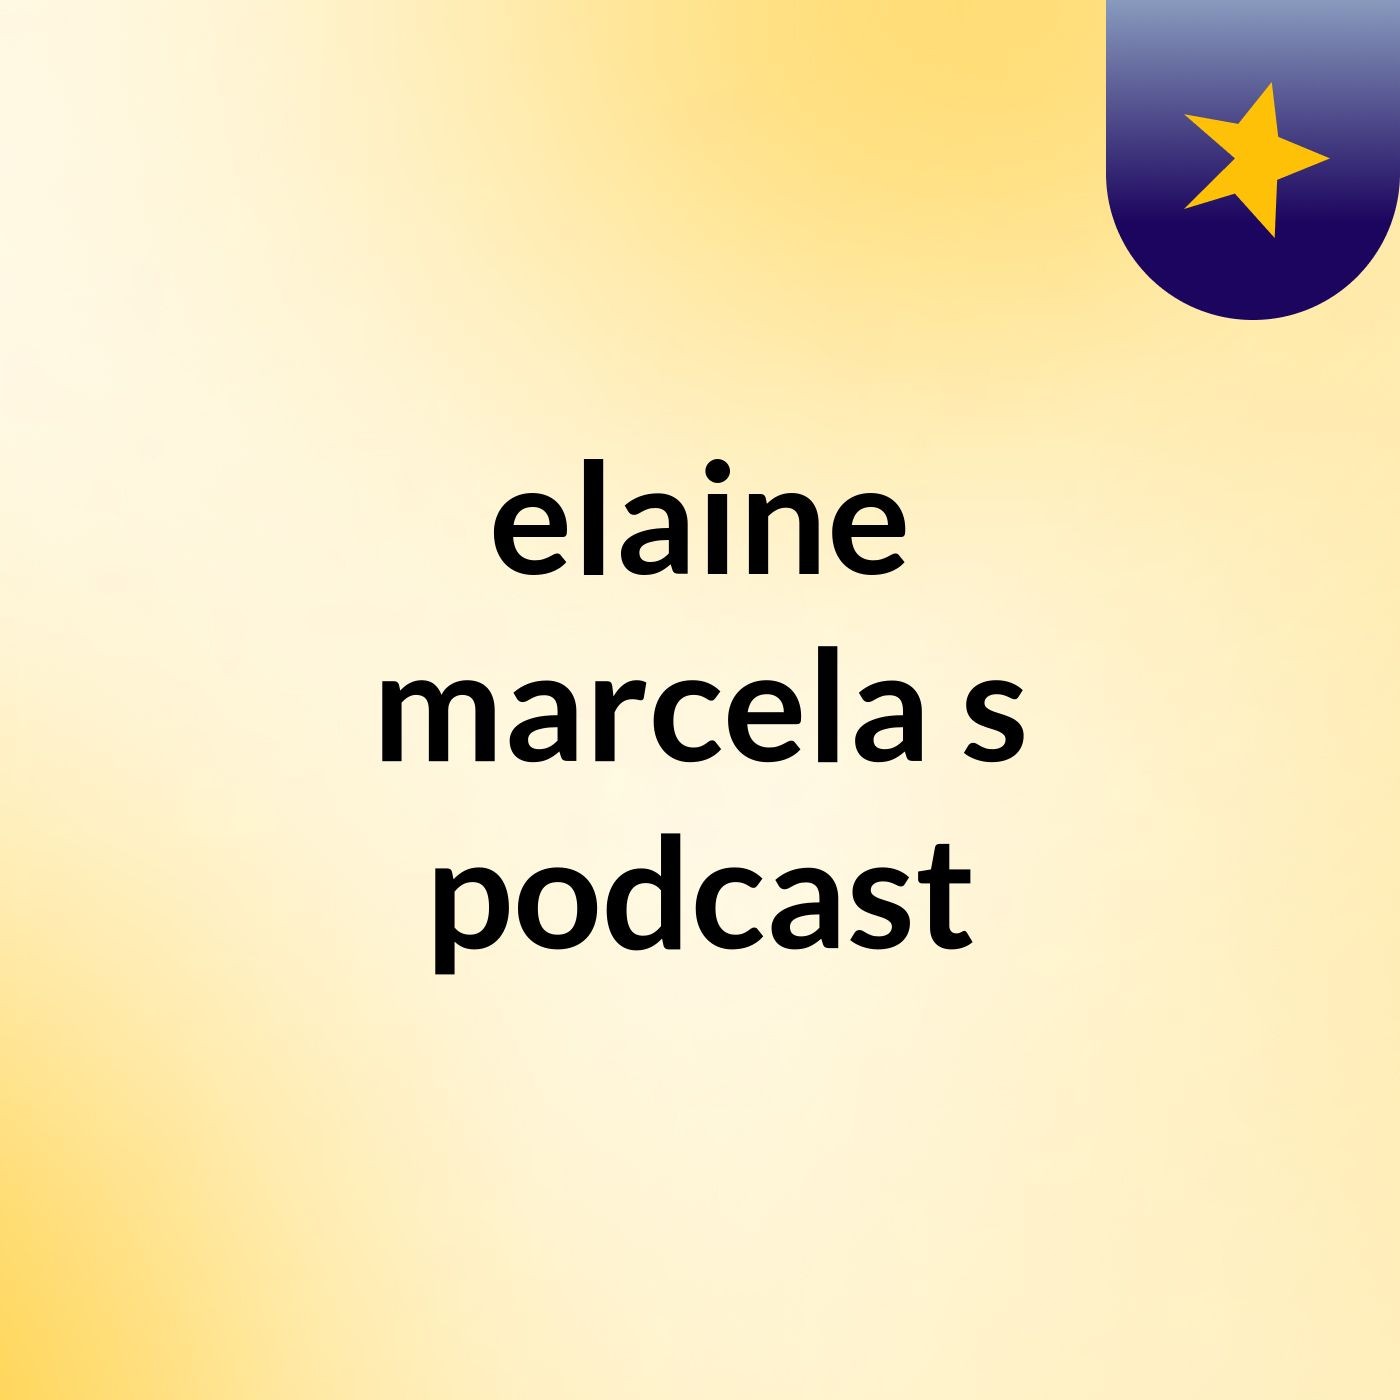 elaine marcela's podcast